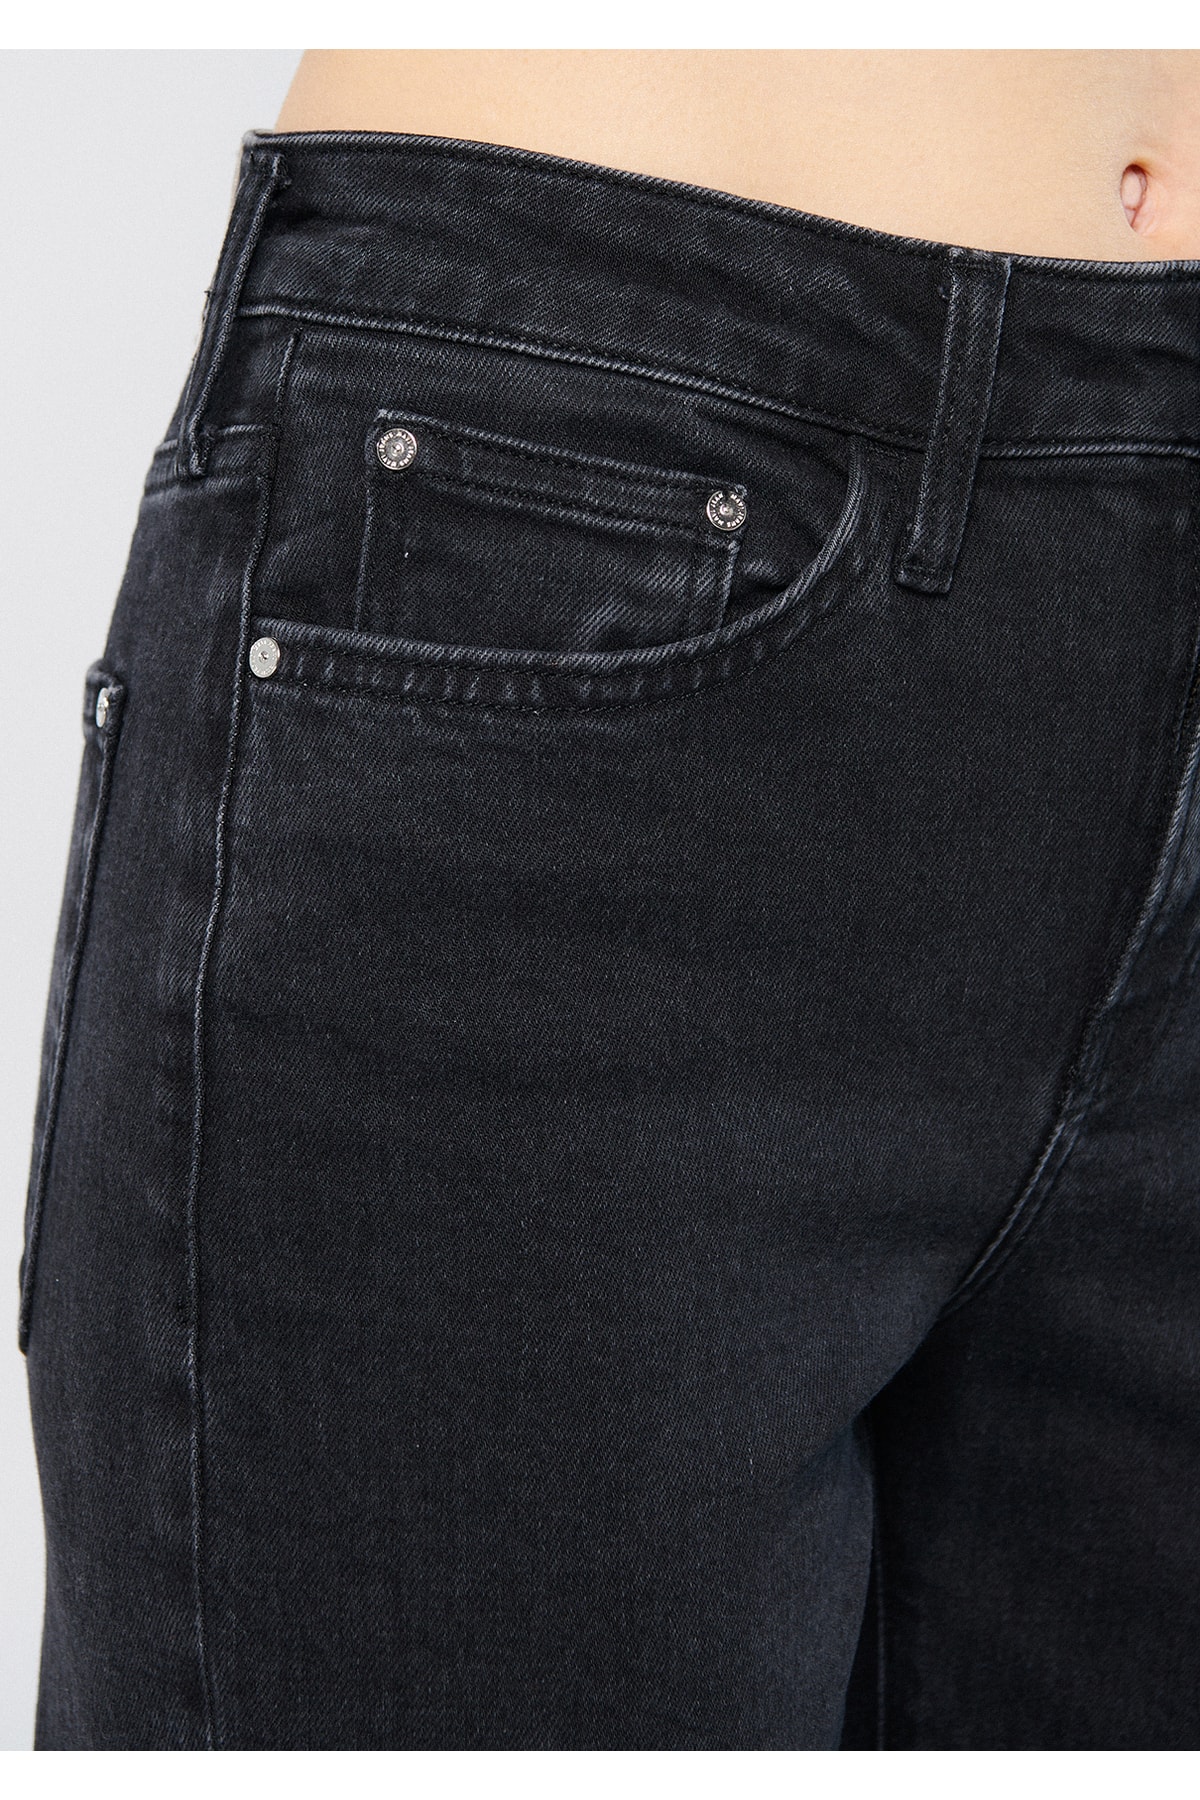 Mavi Jeans Grau Skinny Fast ausverkauft FN7028